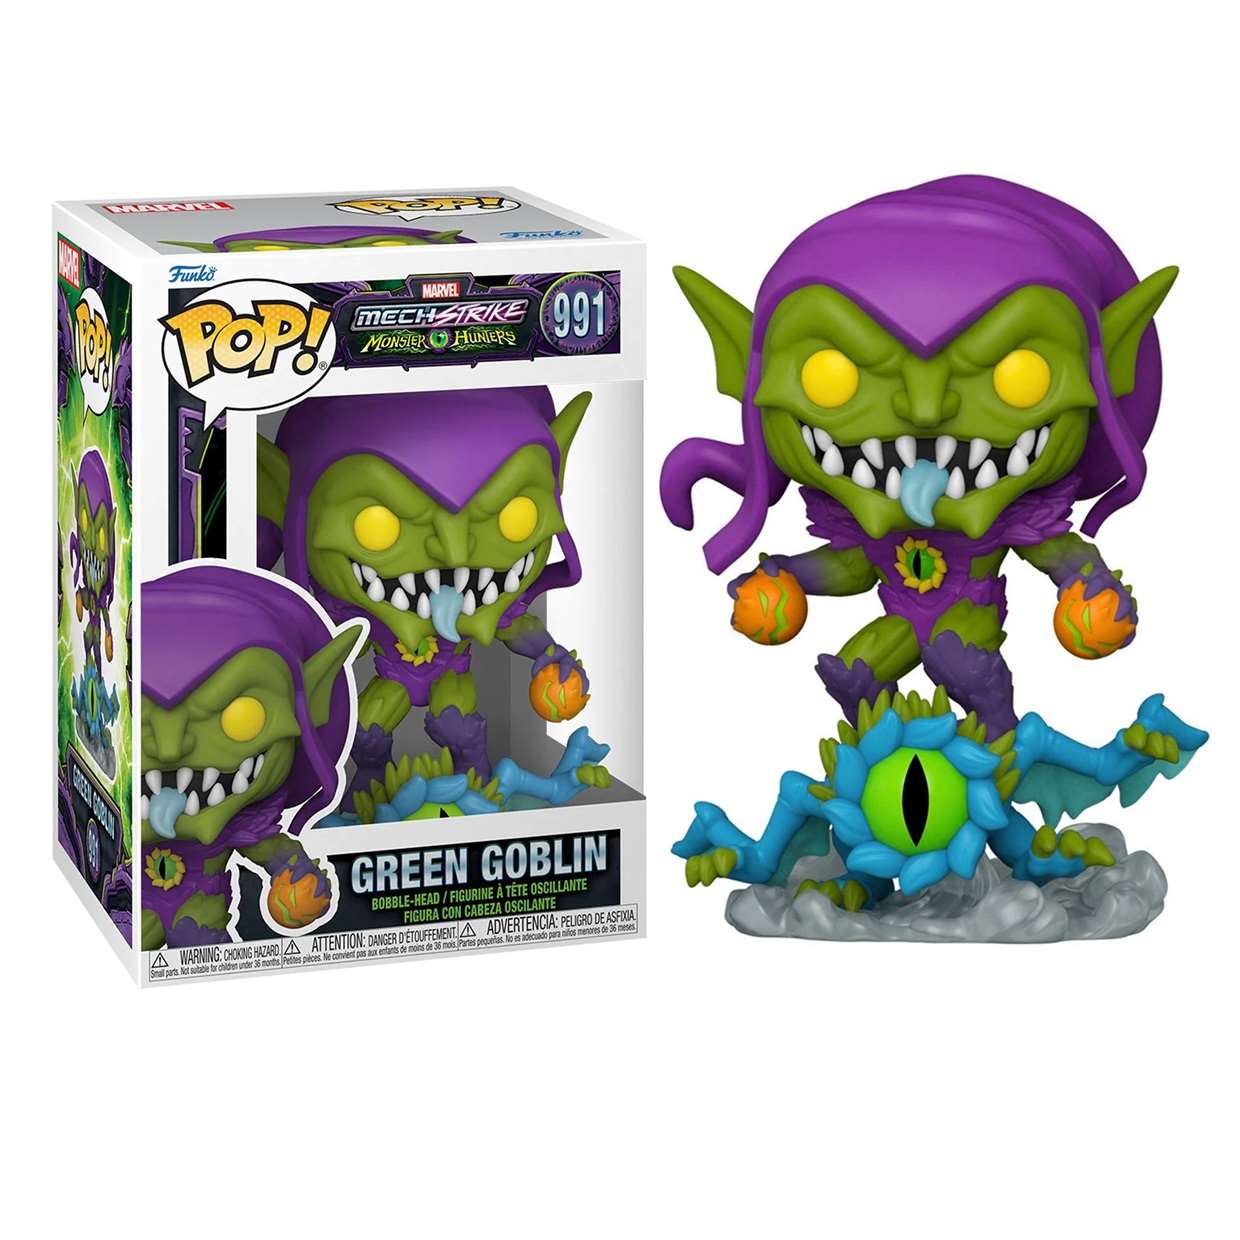 Green Goblin #991 Mech Strike Funko Pop! Monster Hunters 